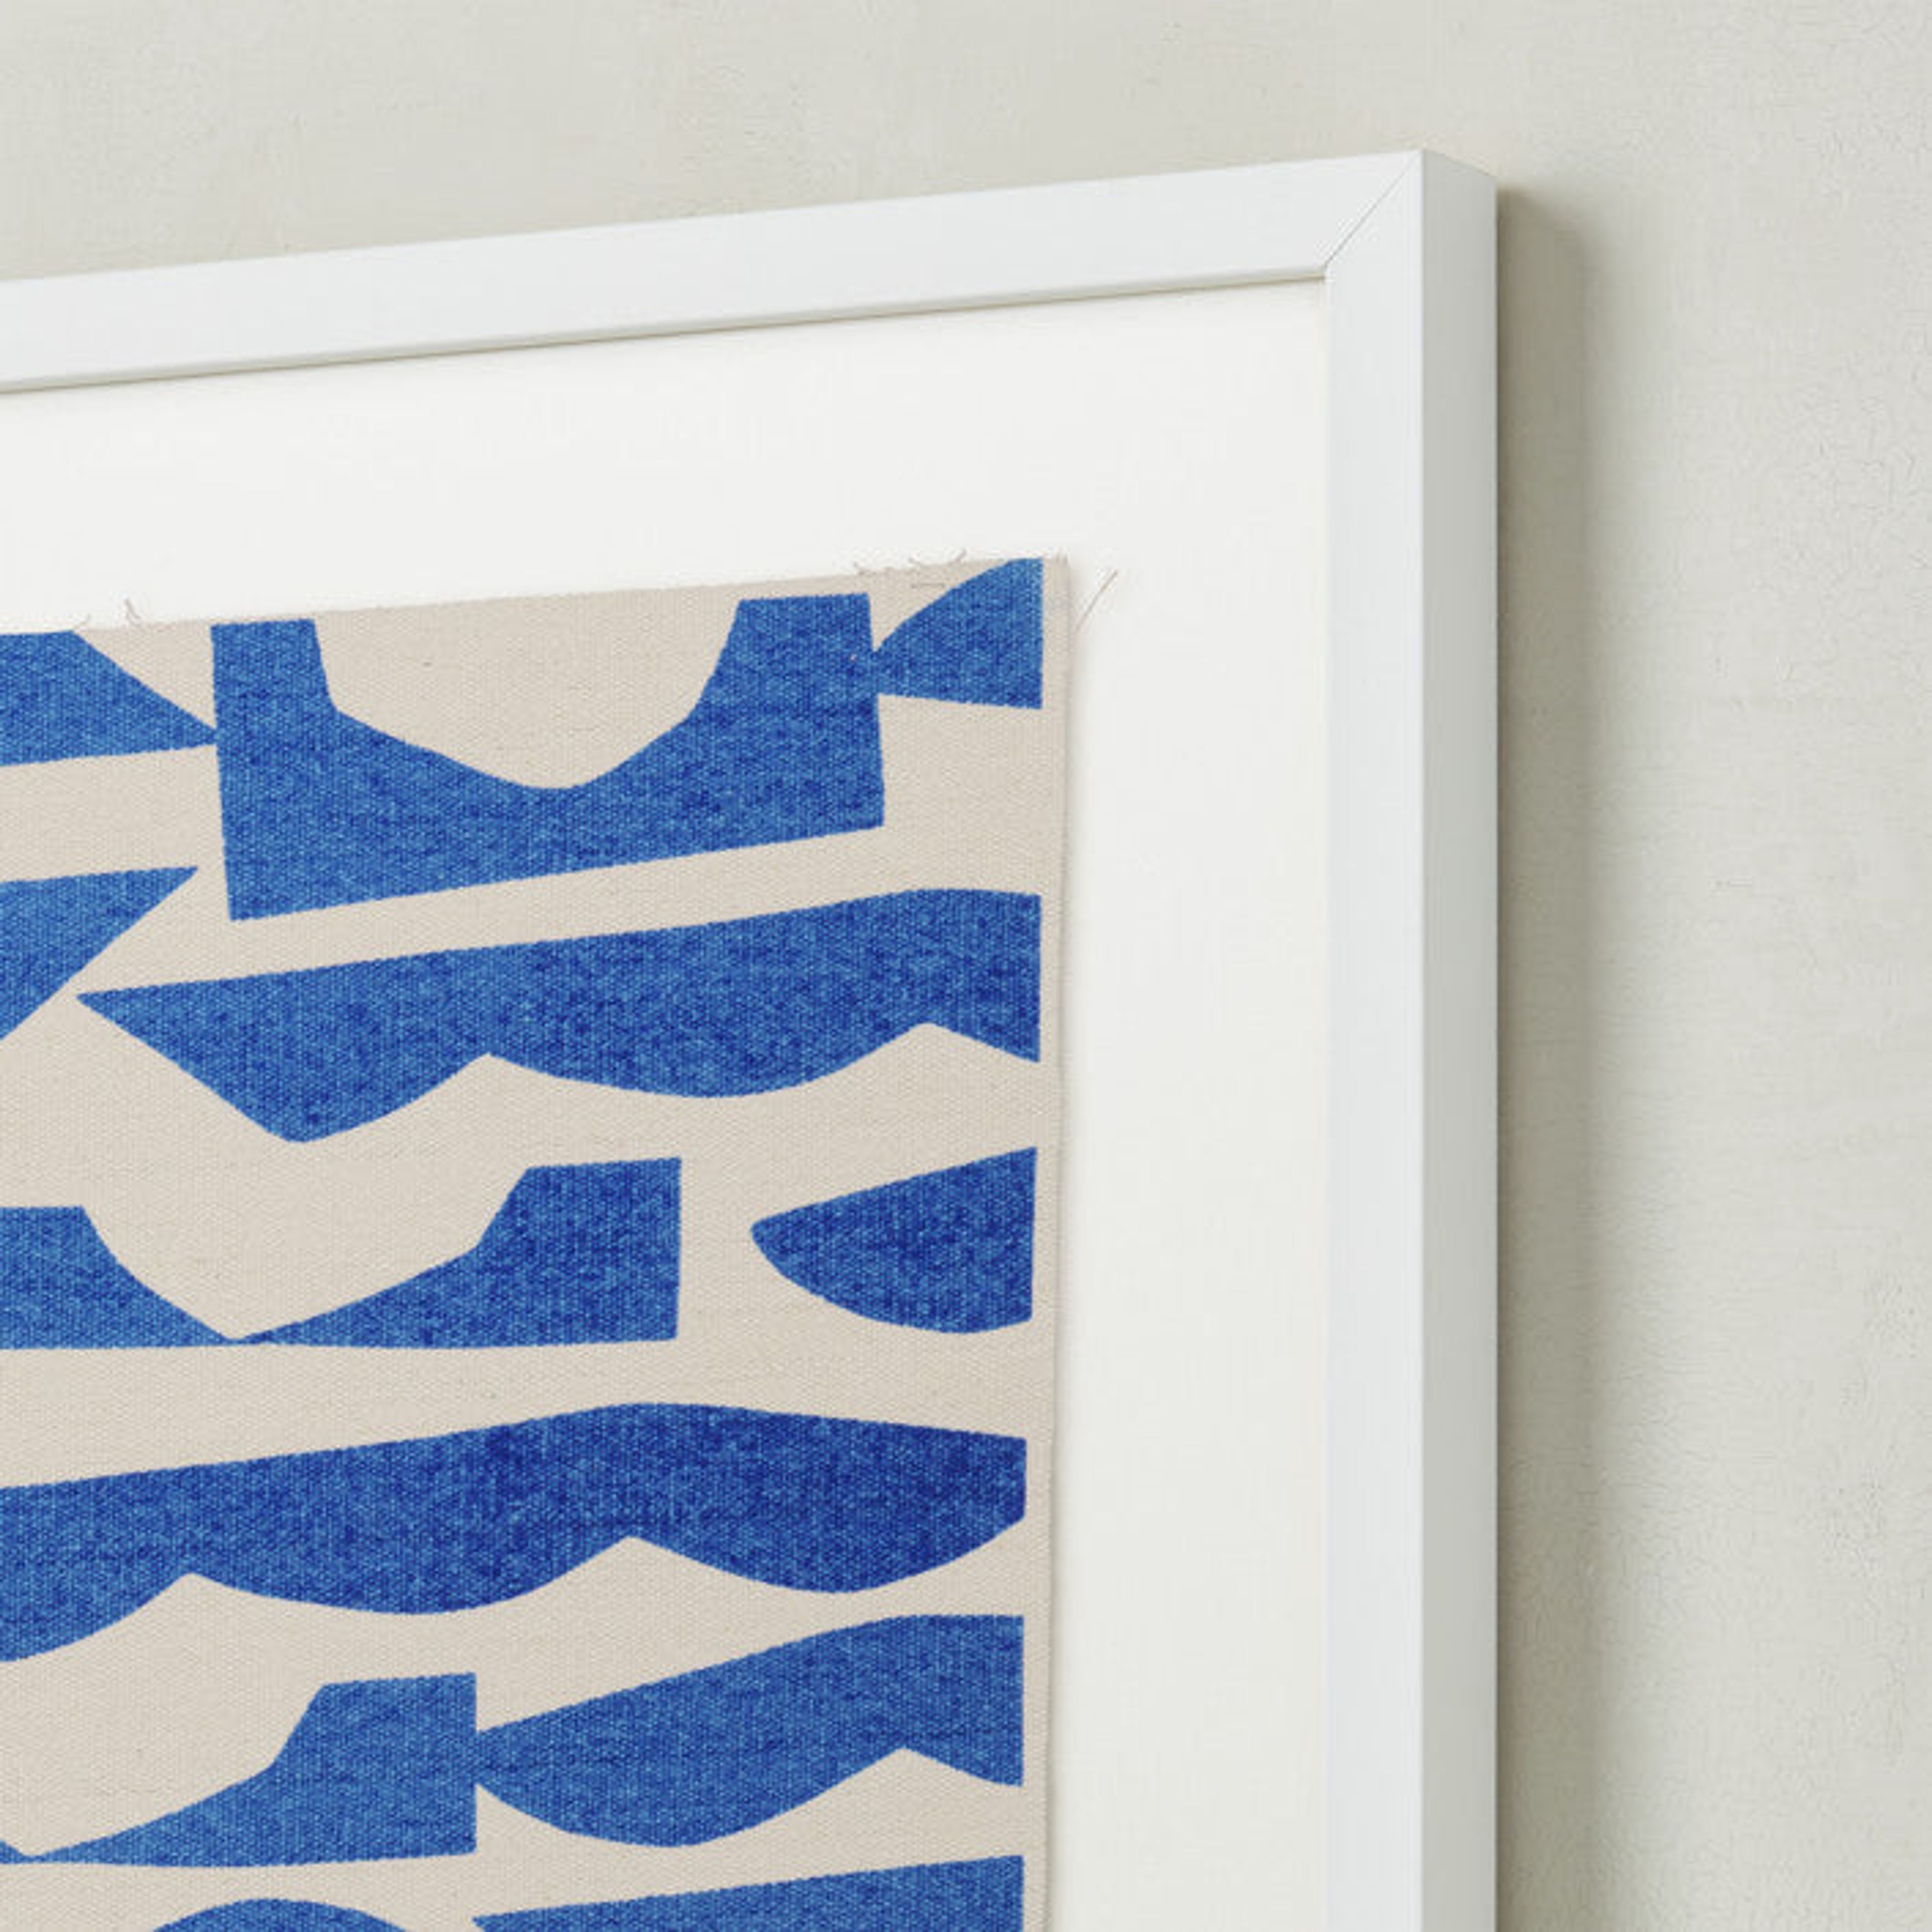 Abstract Waves Block Print Textile Art